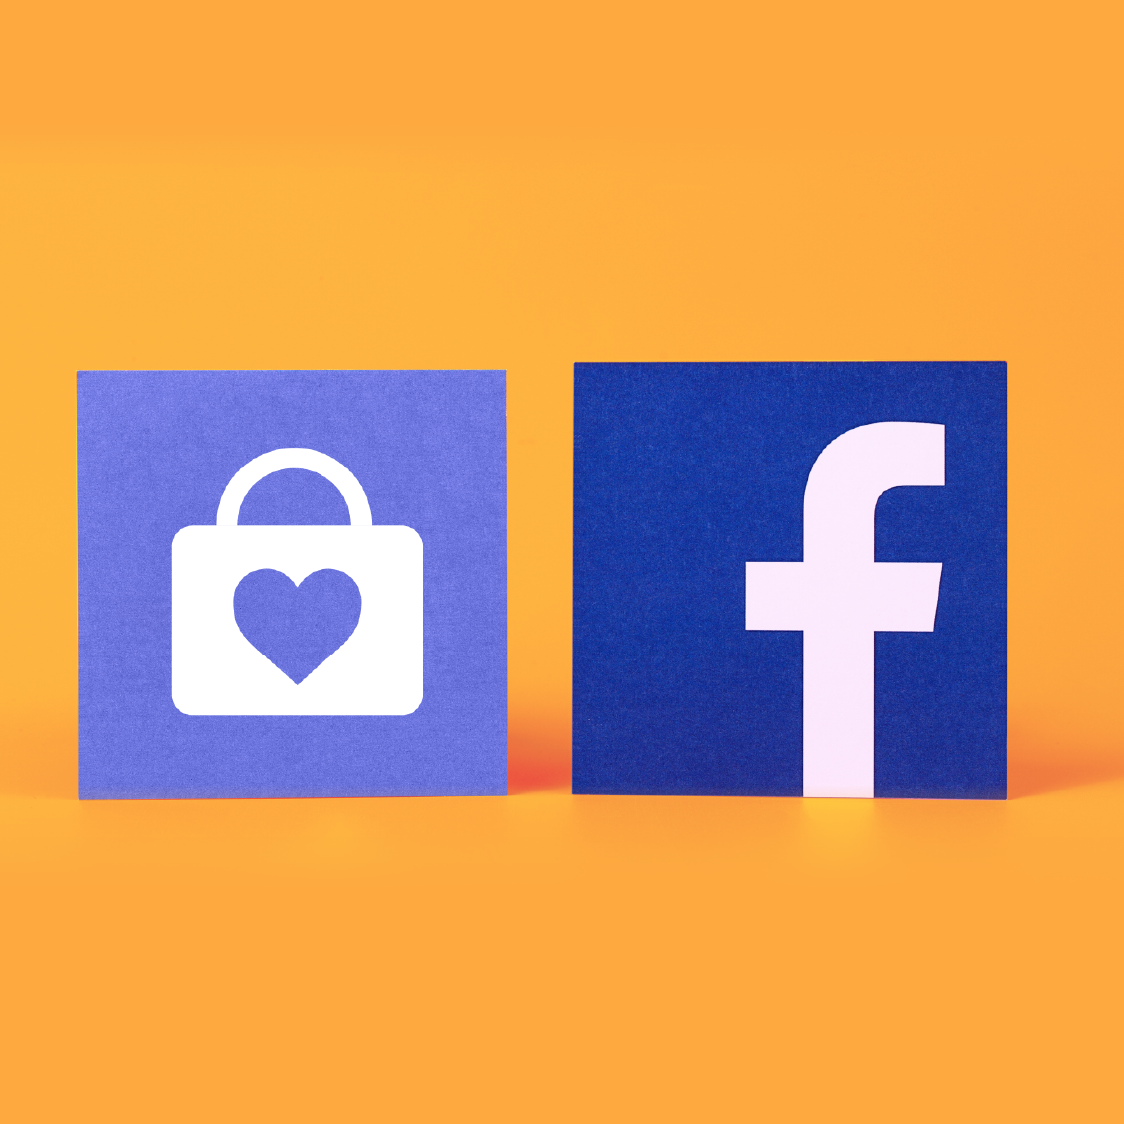 New Facebook Feature: Off-Facebook Activity